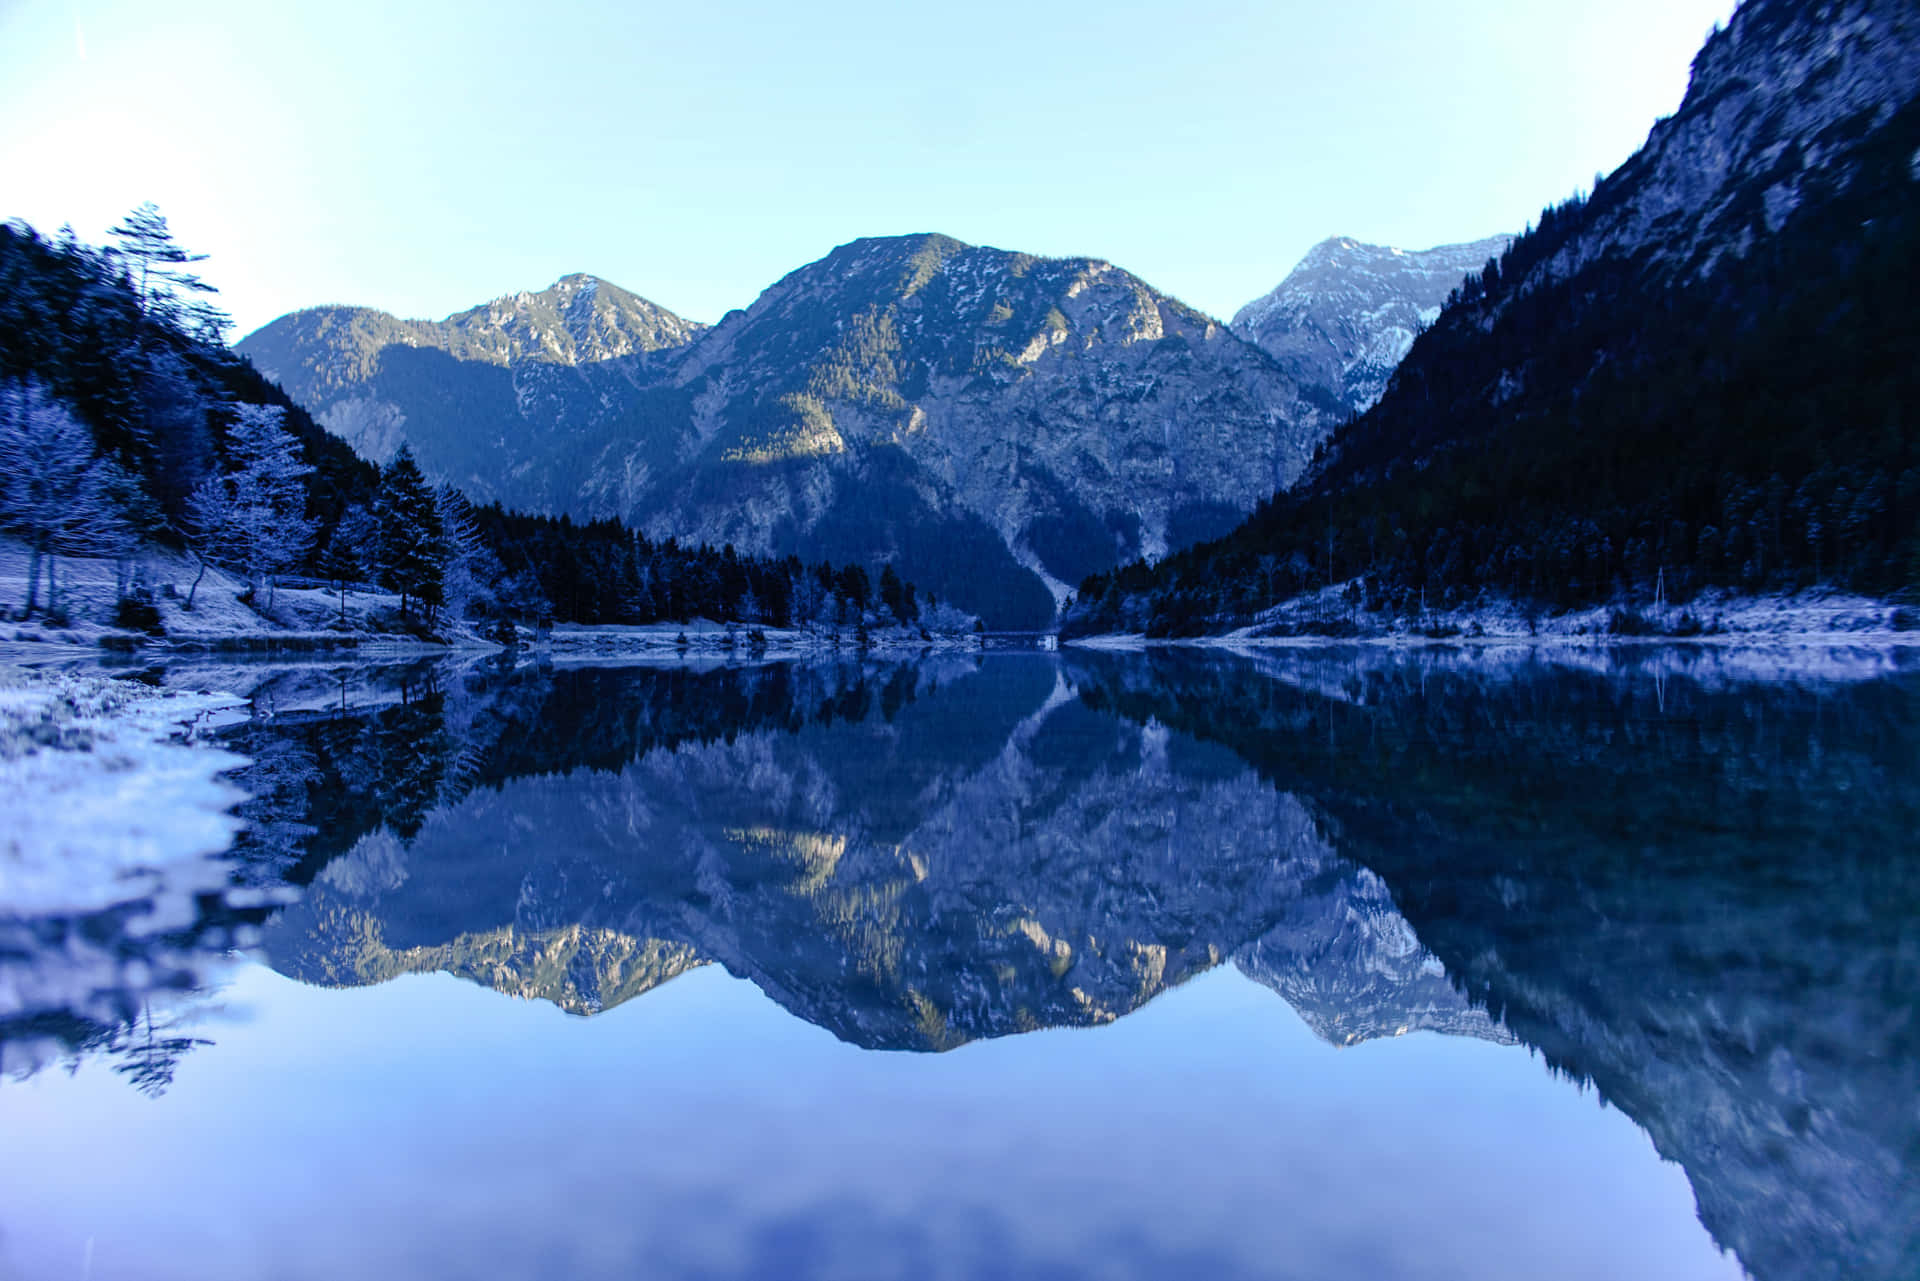 Enjoy the breathtaking view of this beautiful mountain lake. Wallpaper